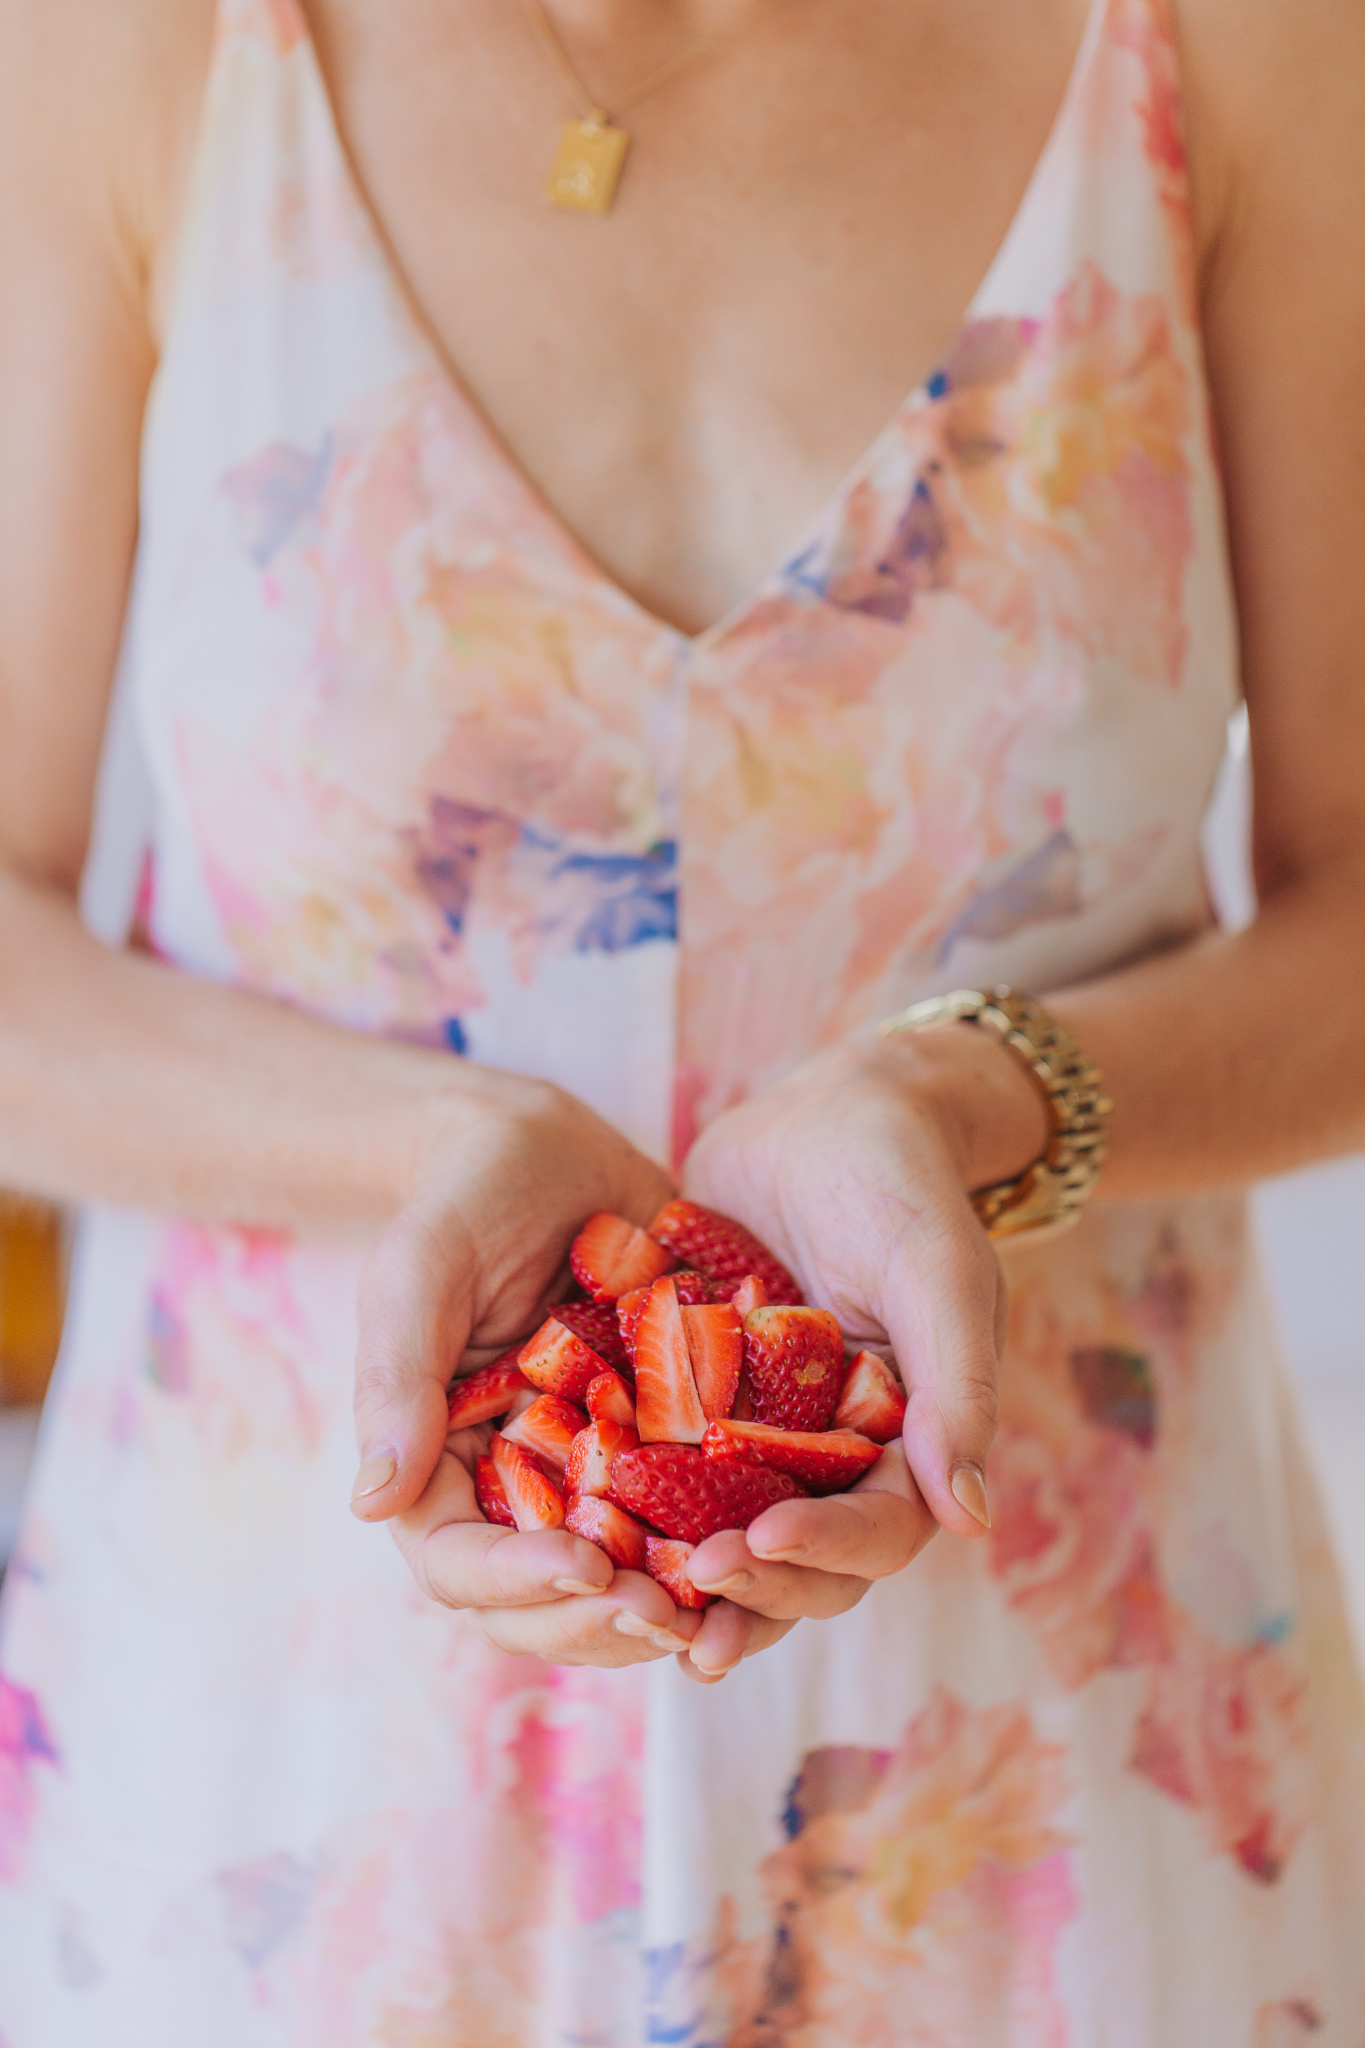 Buffy Ellen from Be Good Organics holding strawberries